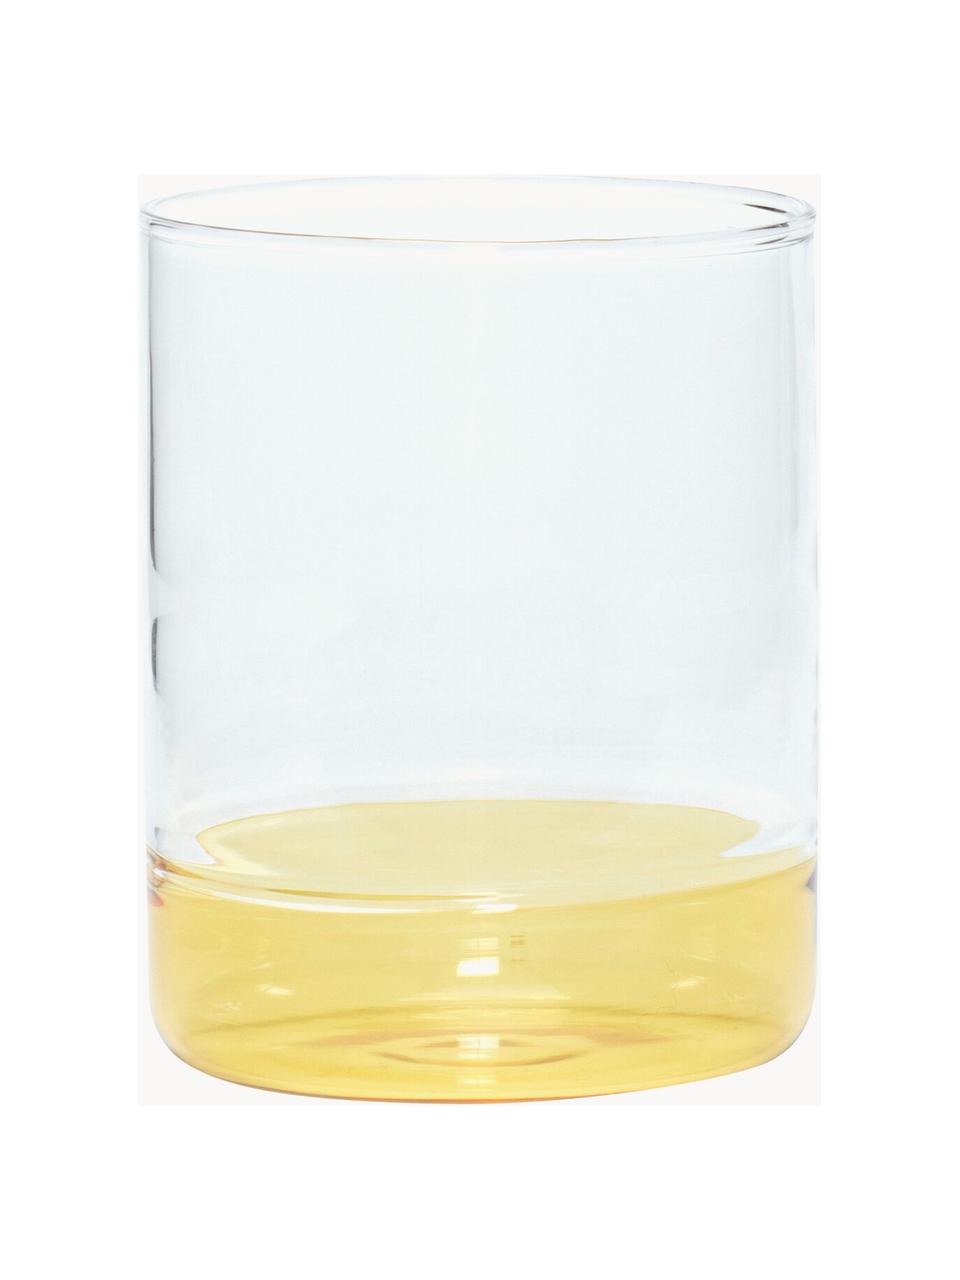 Ručně foukané sklenice Kiosk, 6 ks, Sklo, Žlutá, Ø 8 cm, V 10 cm, 380 ml